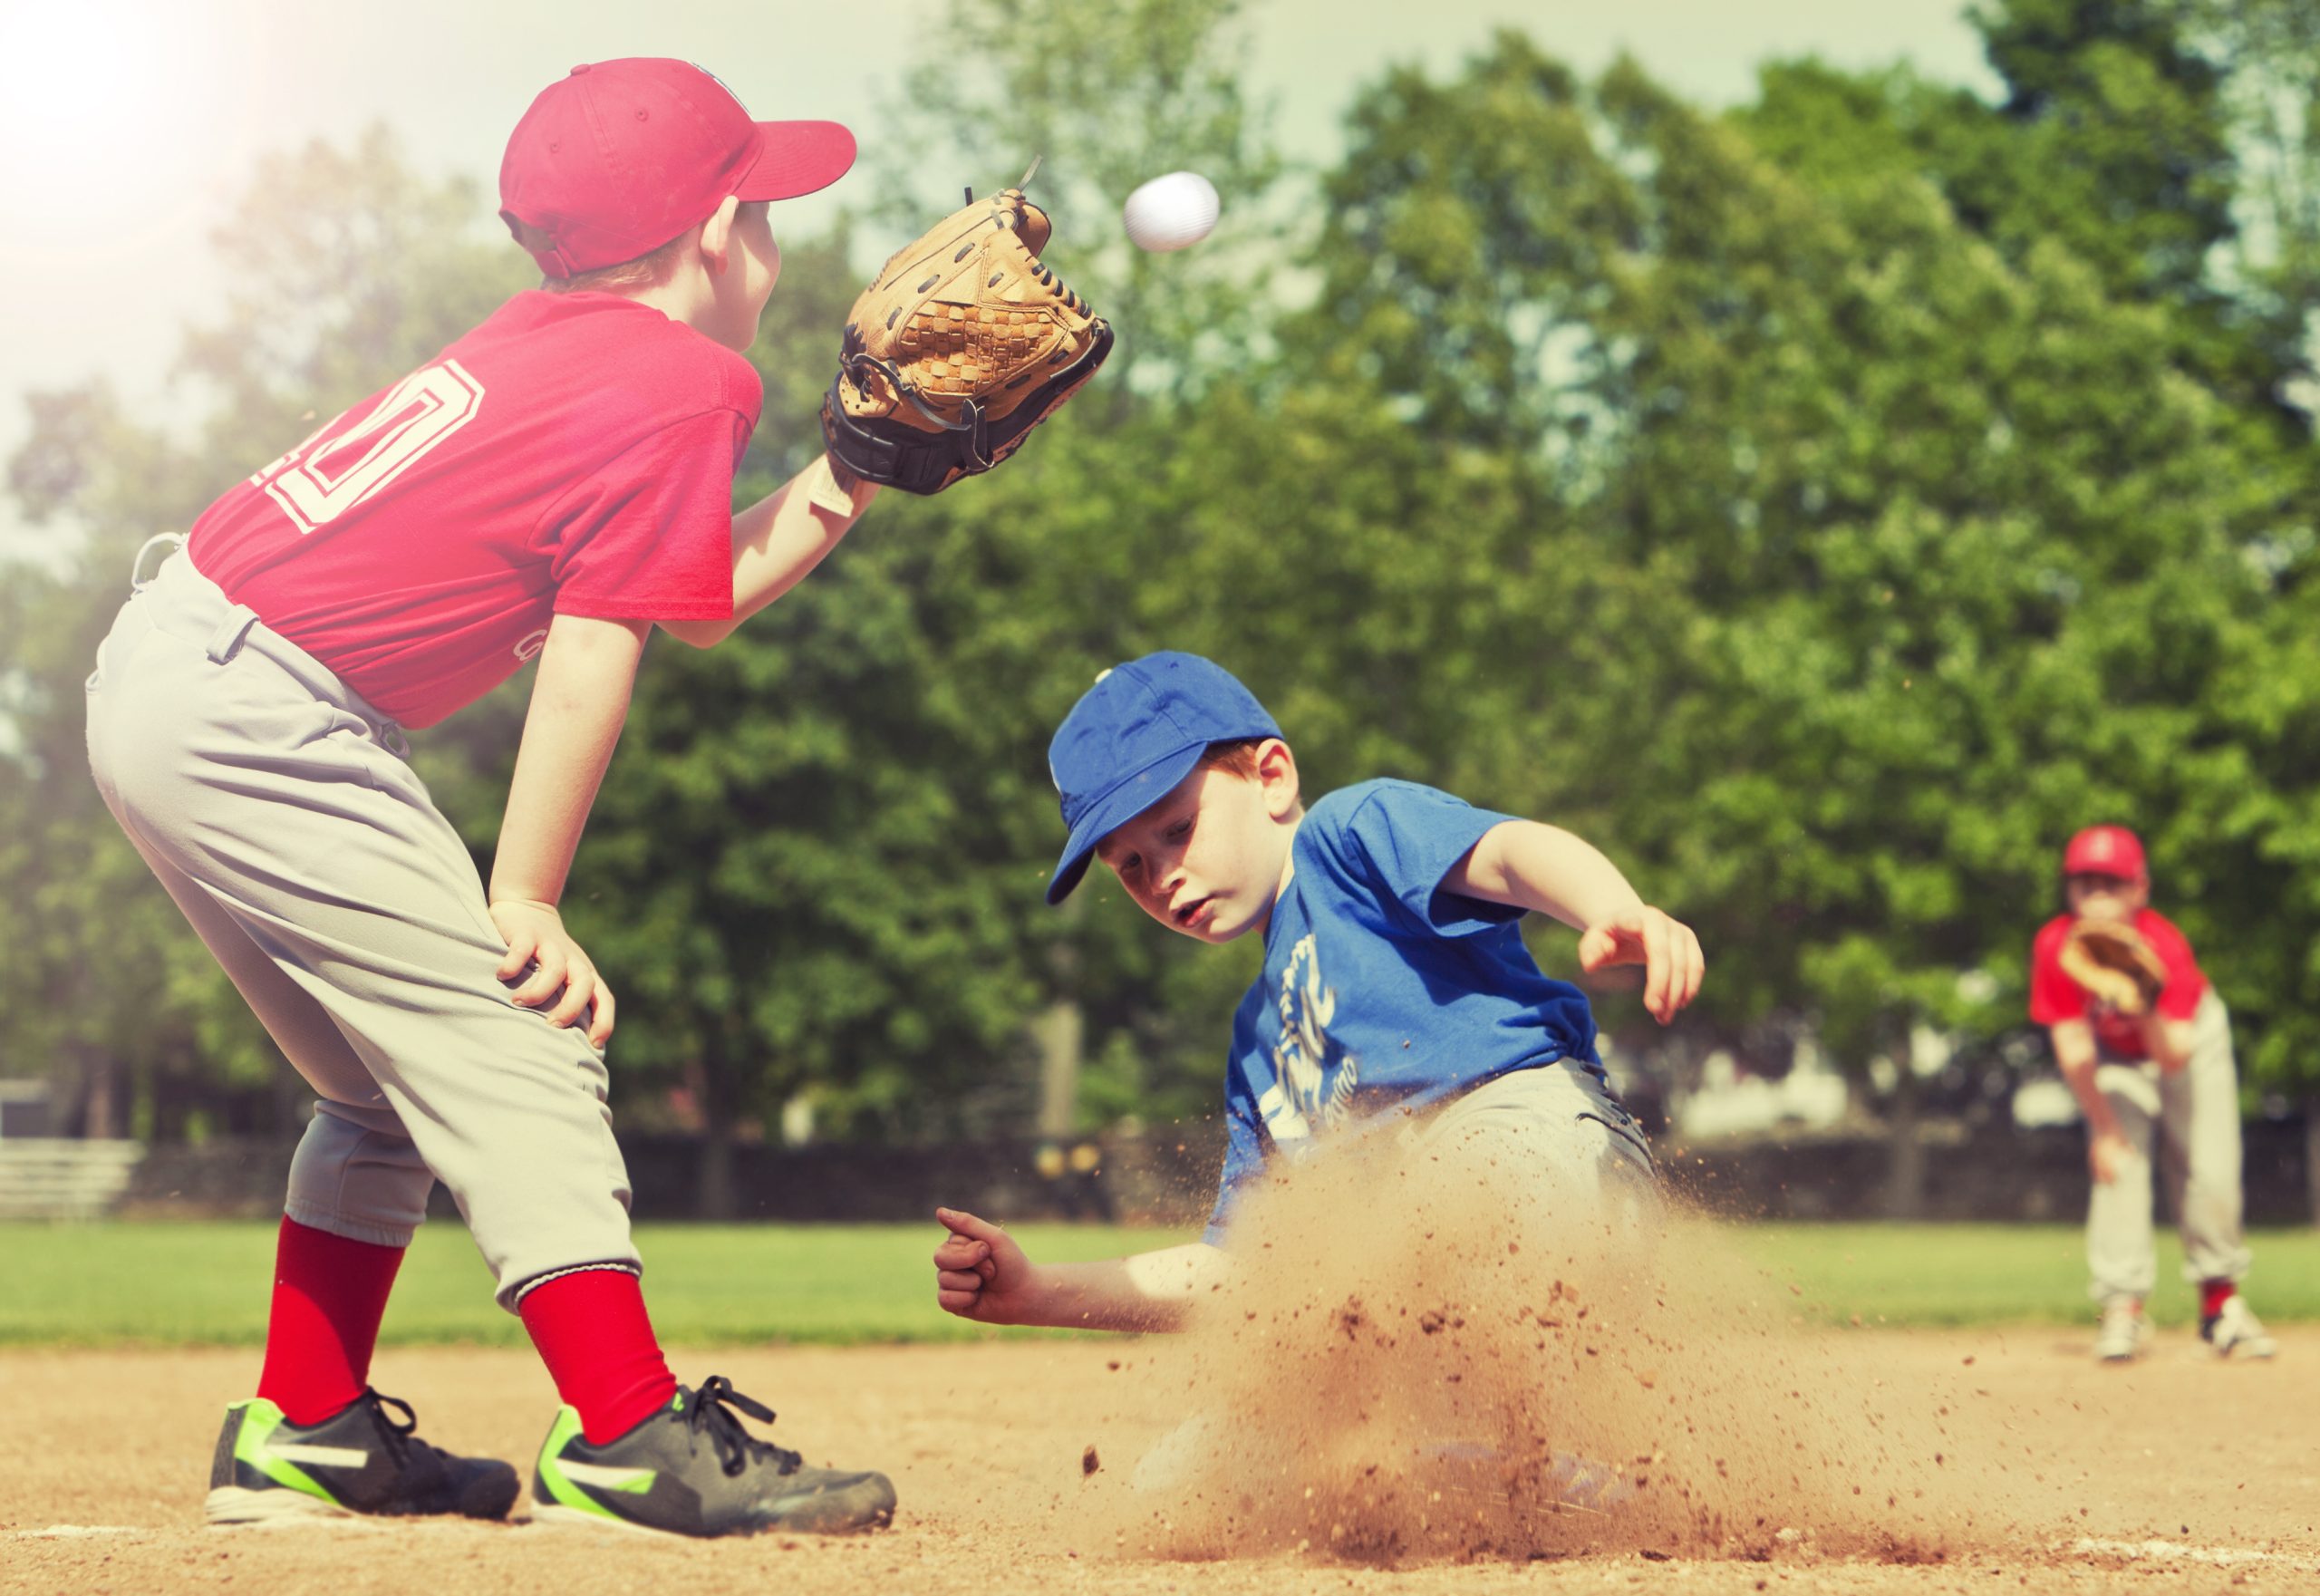 Boy sliding into base during a baseball game (Photo: iStock - stu99)